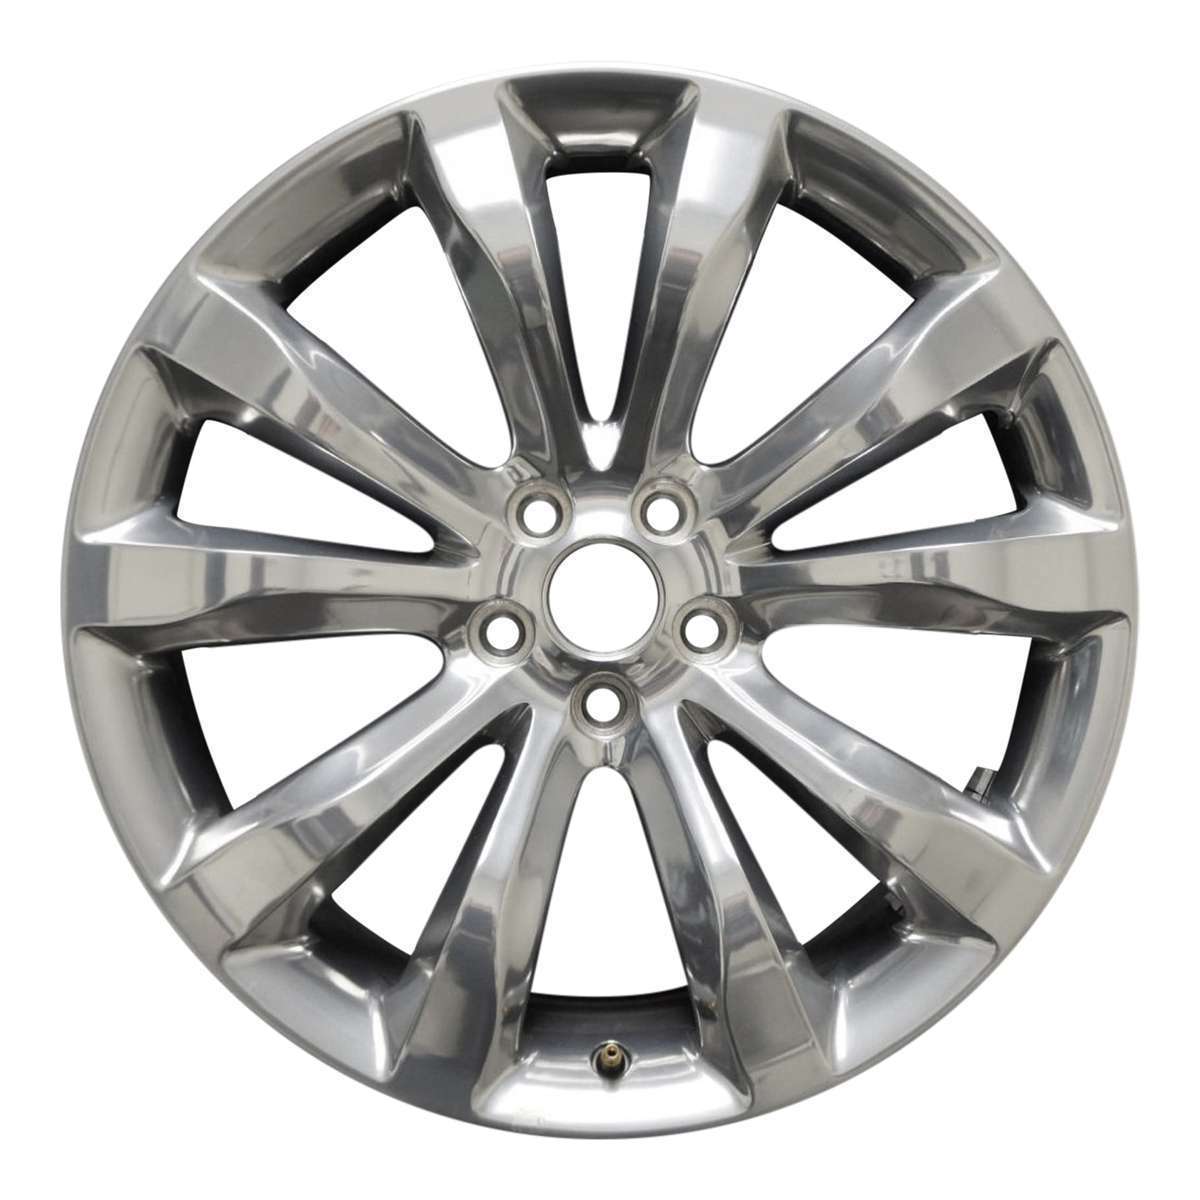 2016 Chrysler 300 20" OEM Wheel Rim W2540AP